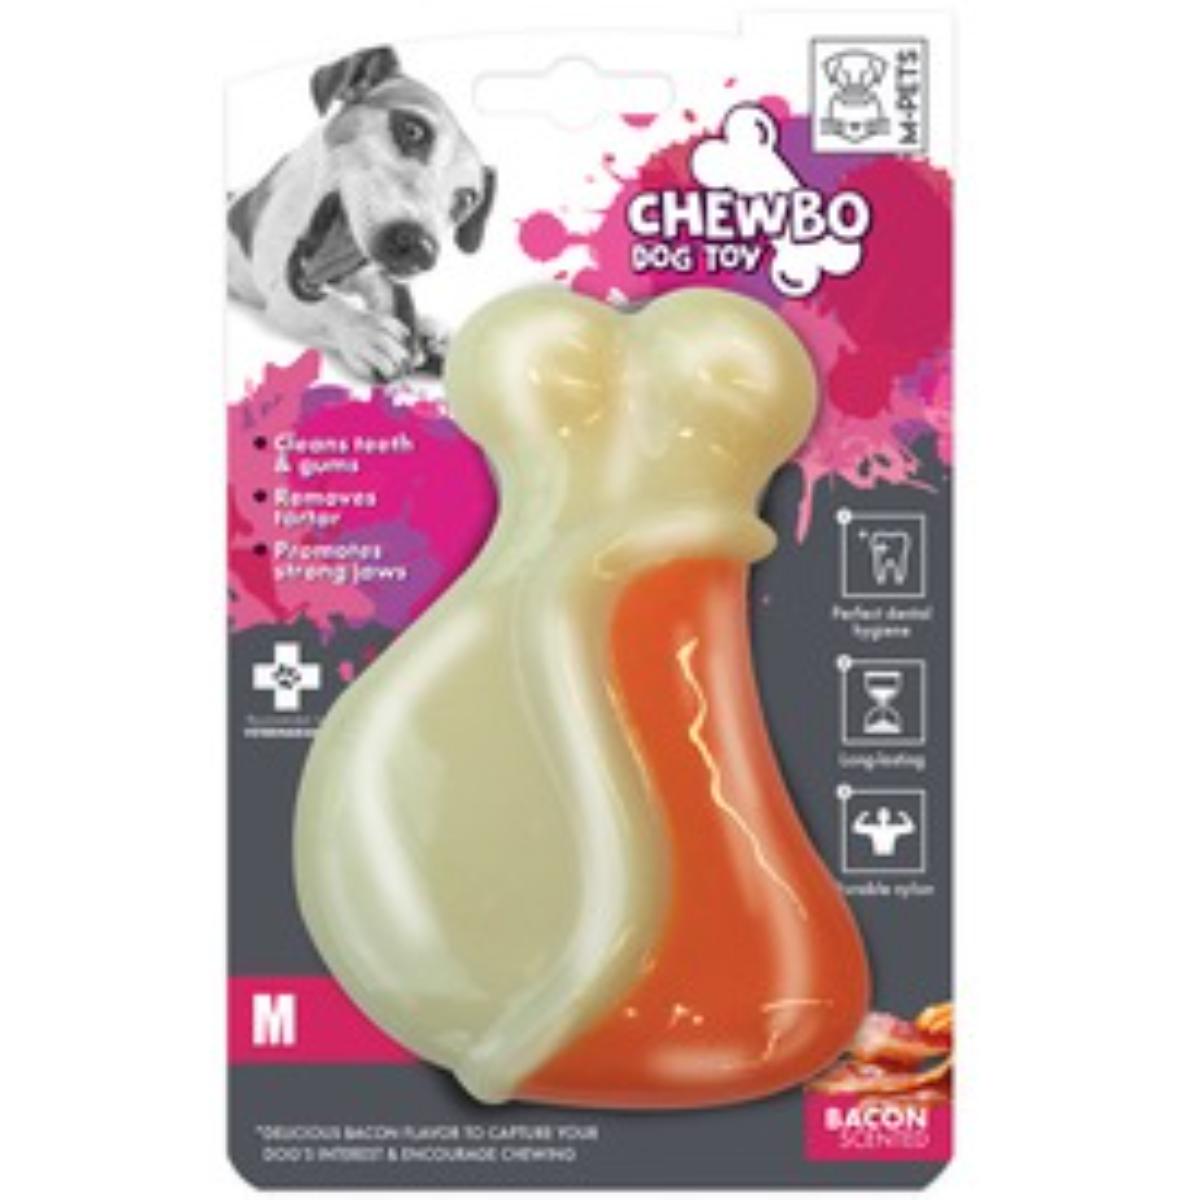 M-PETS Chewbo Leg, jucărie de ros, aromă Bacon, câini, dentiție, cauciuc M-PETS Chewbo Leg, jucărie de ros, aromă Bacon, câini S-M, dentiție, cauciuc, alb și portocaliu, 7.8cm